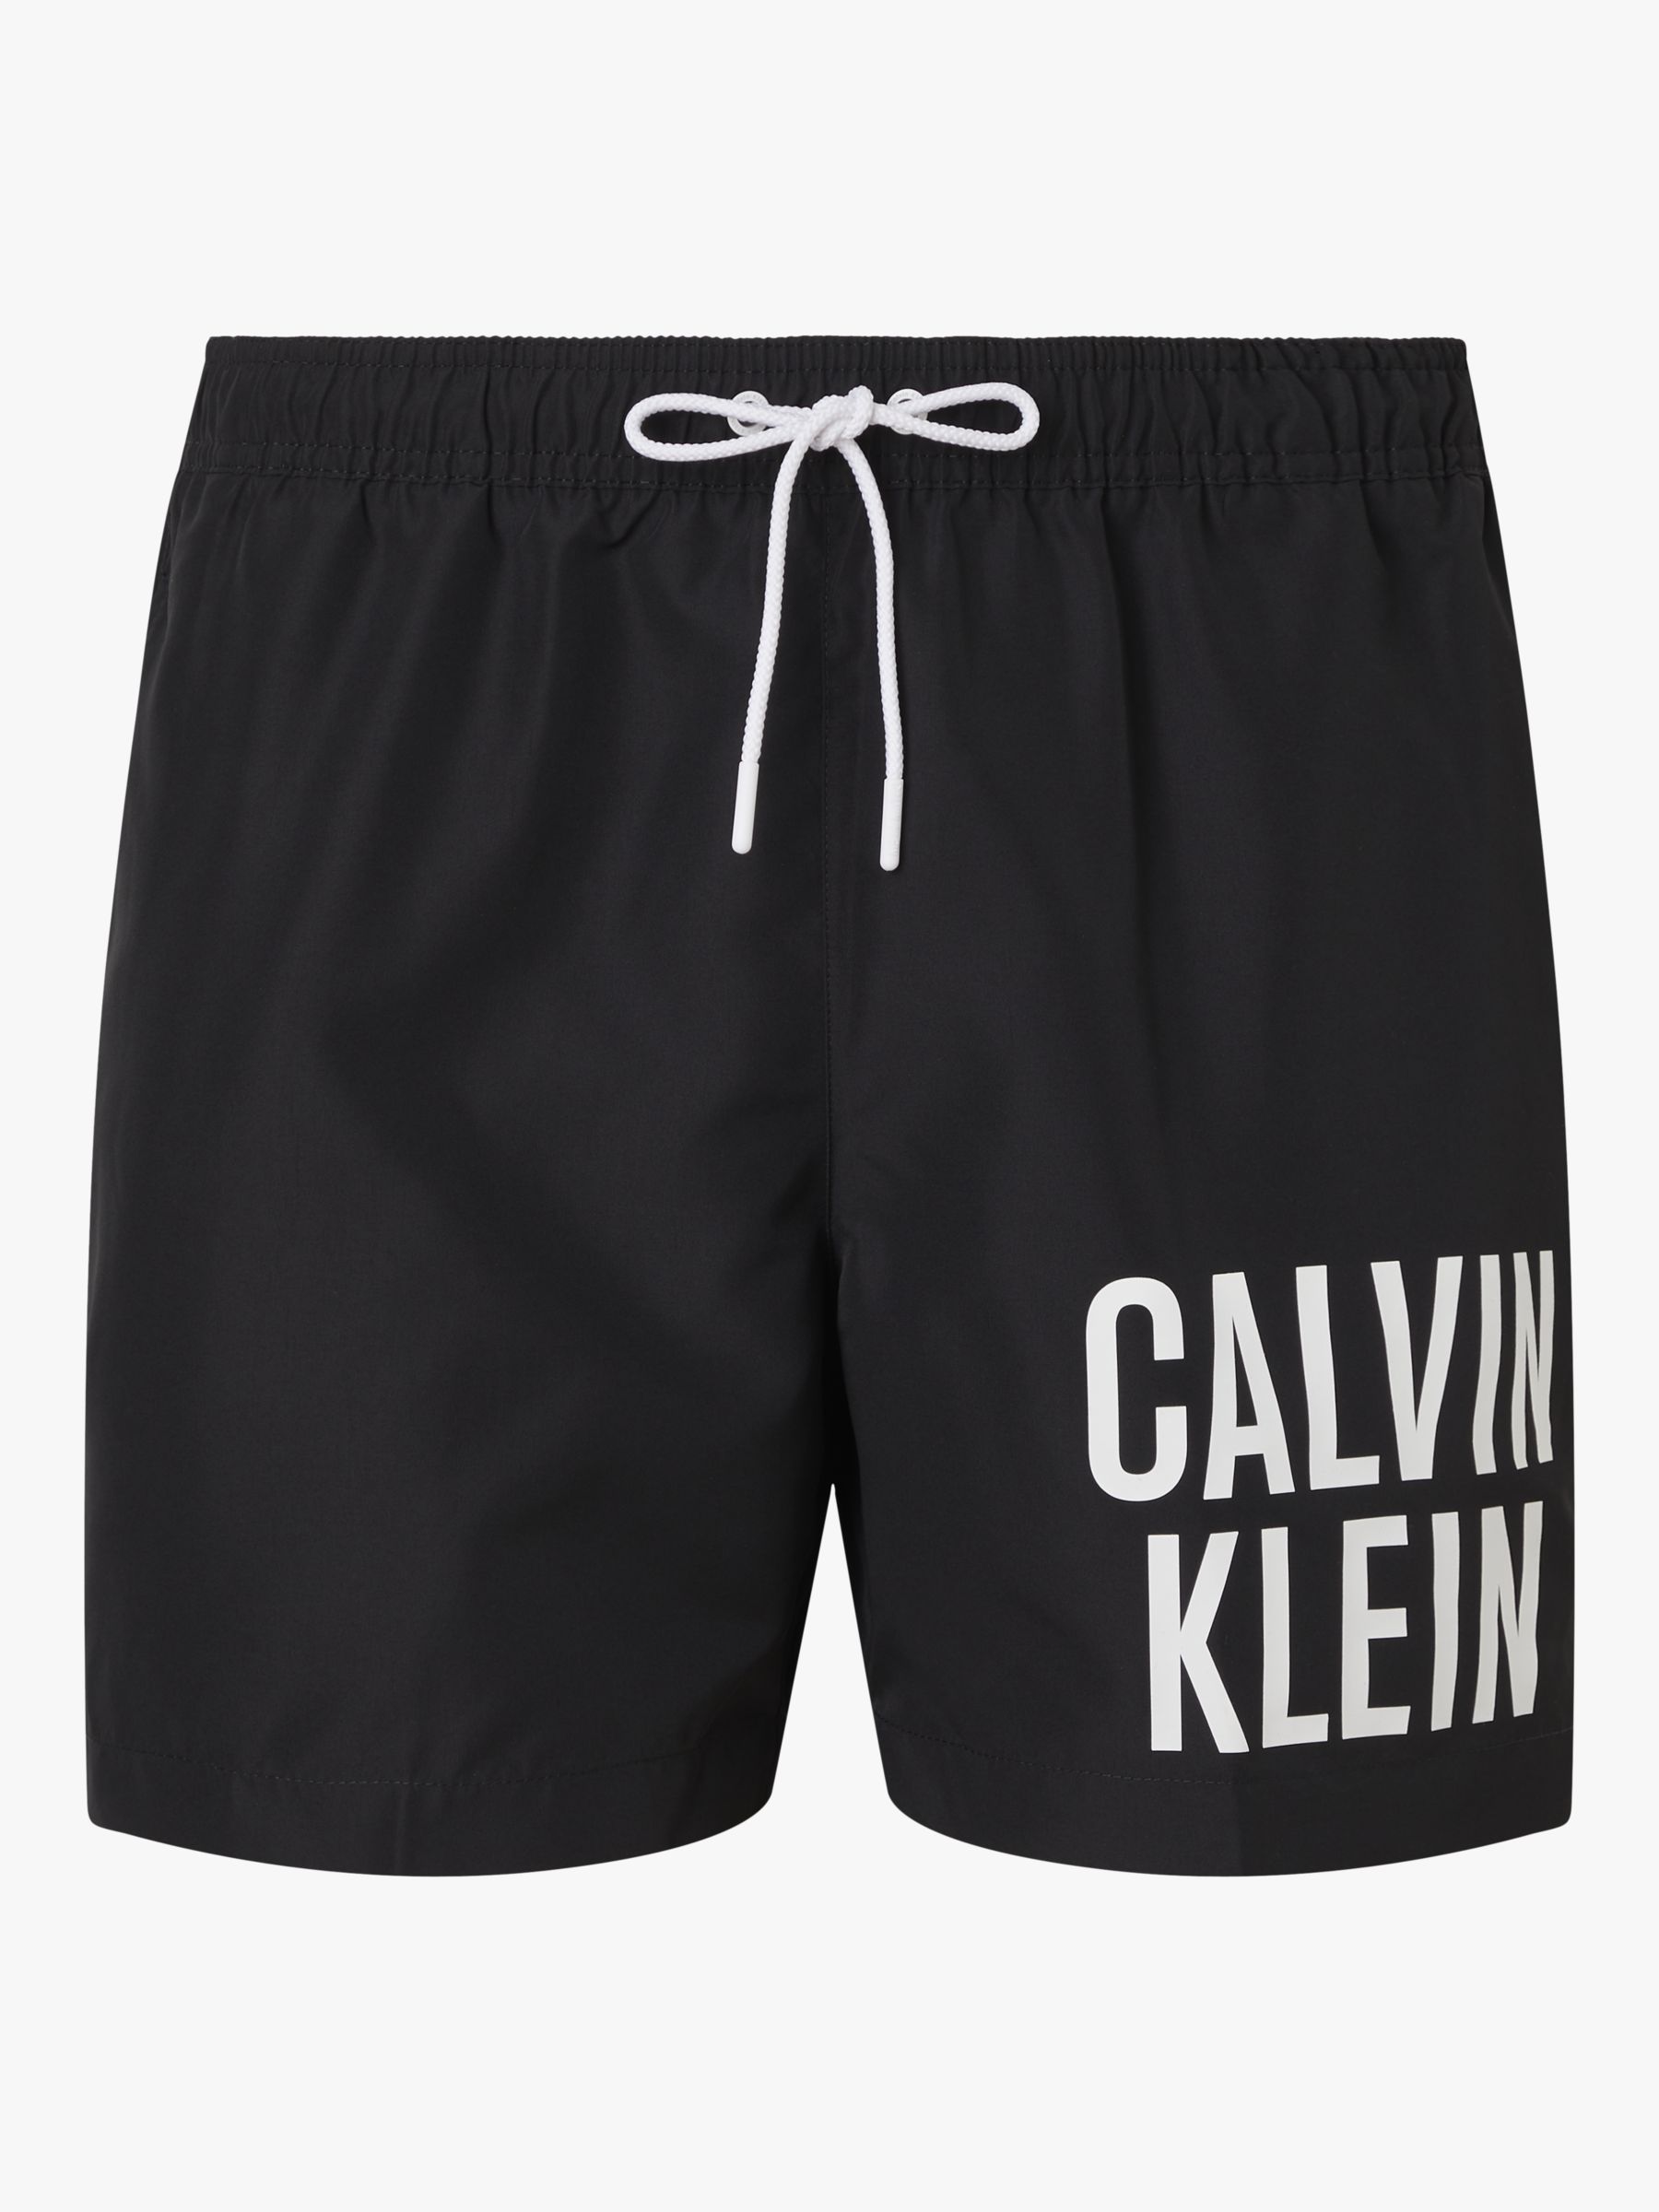 Calvin Klein Intense Power Recycled Poly Swim Shorts, Pvh Black, S